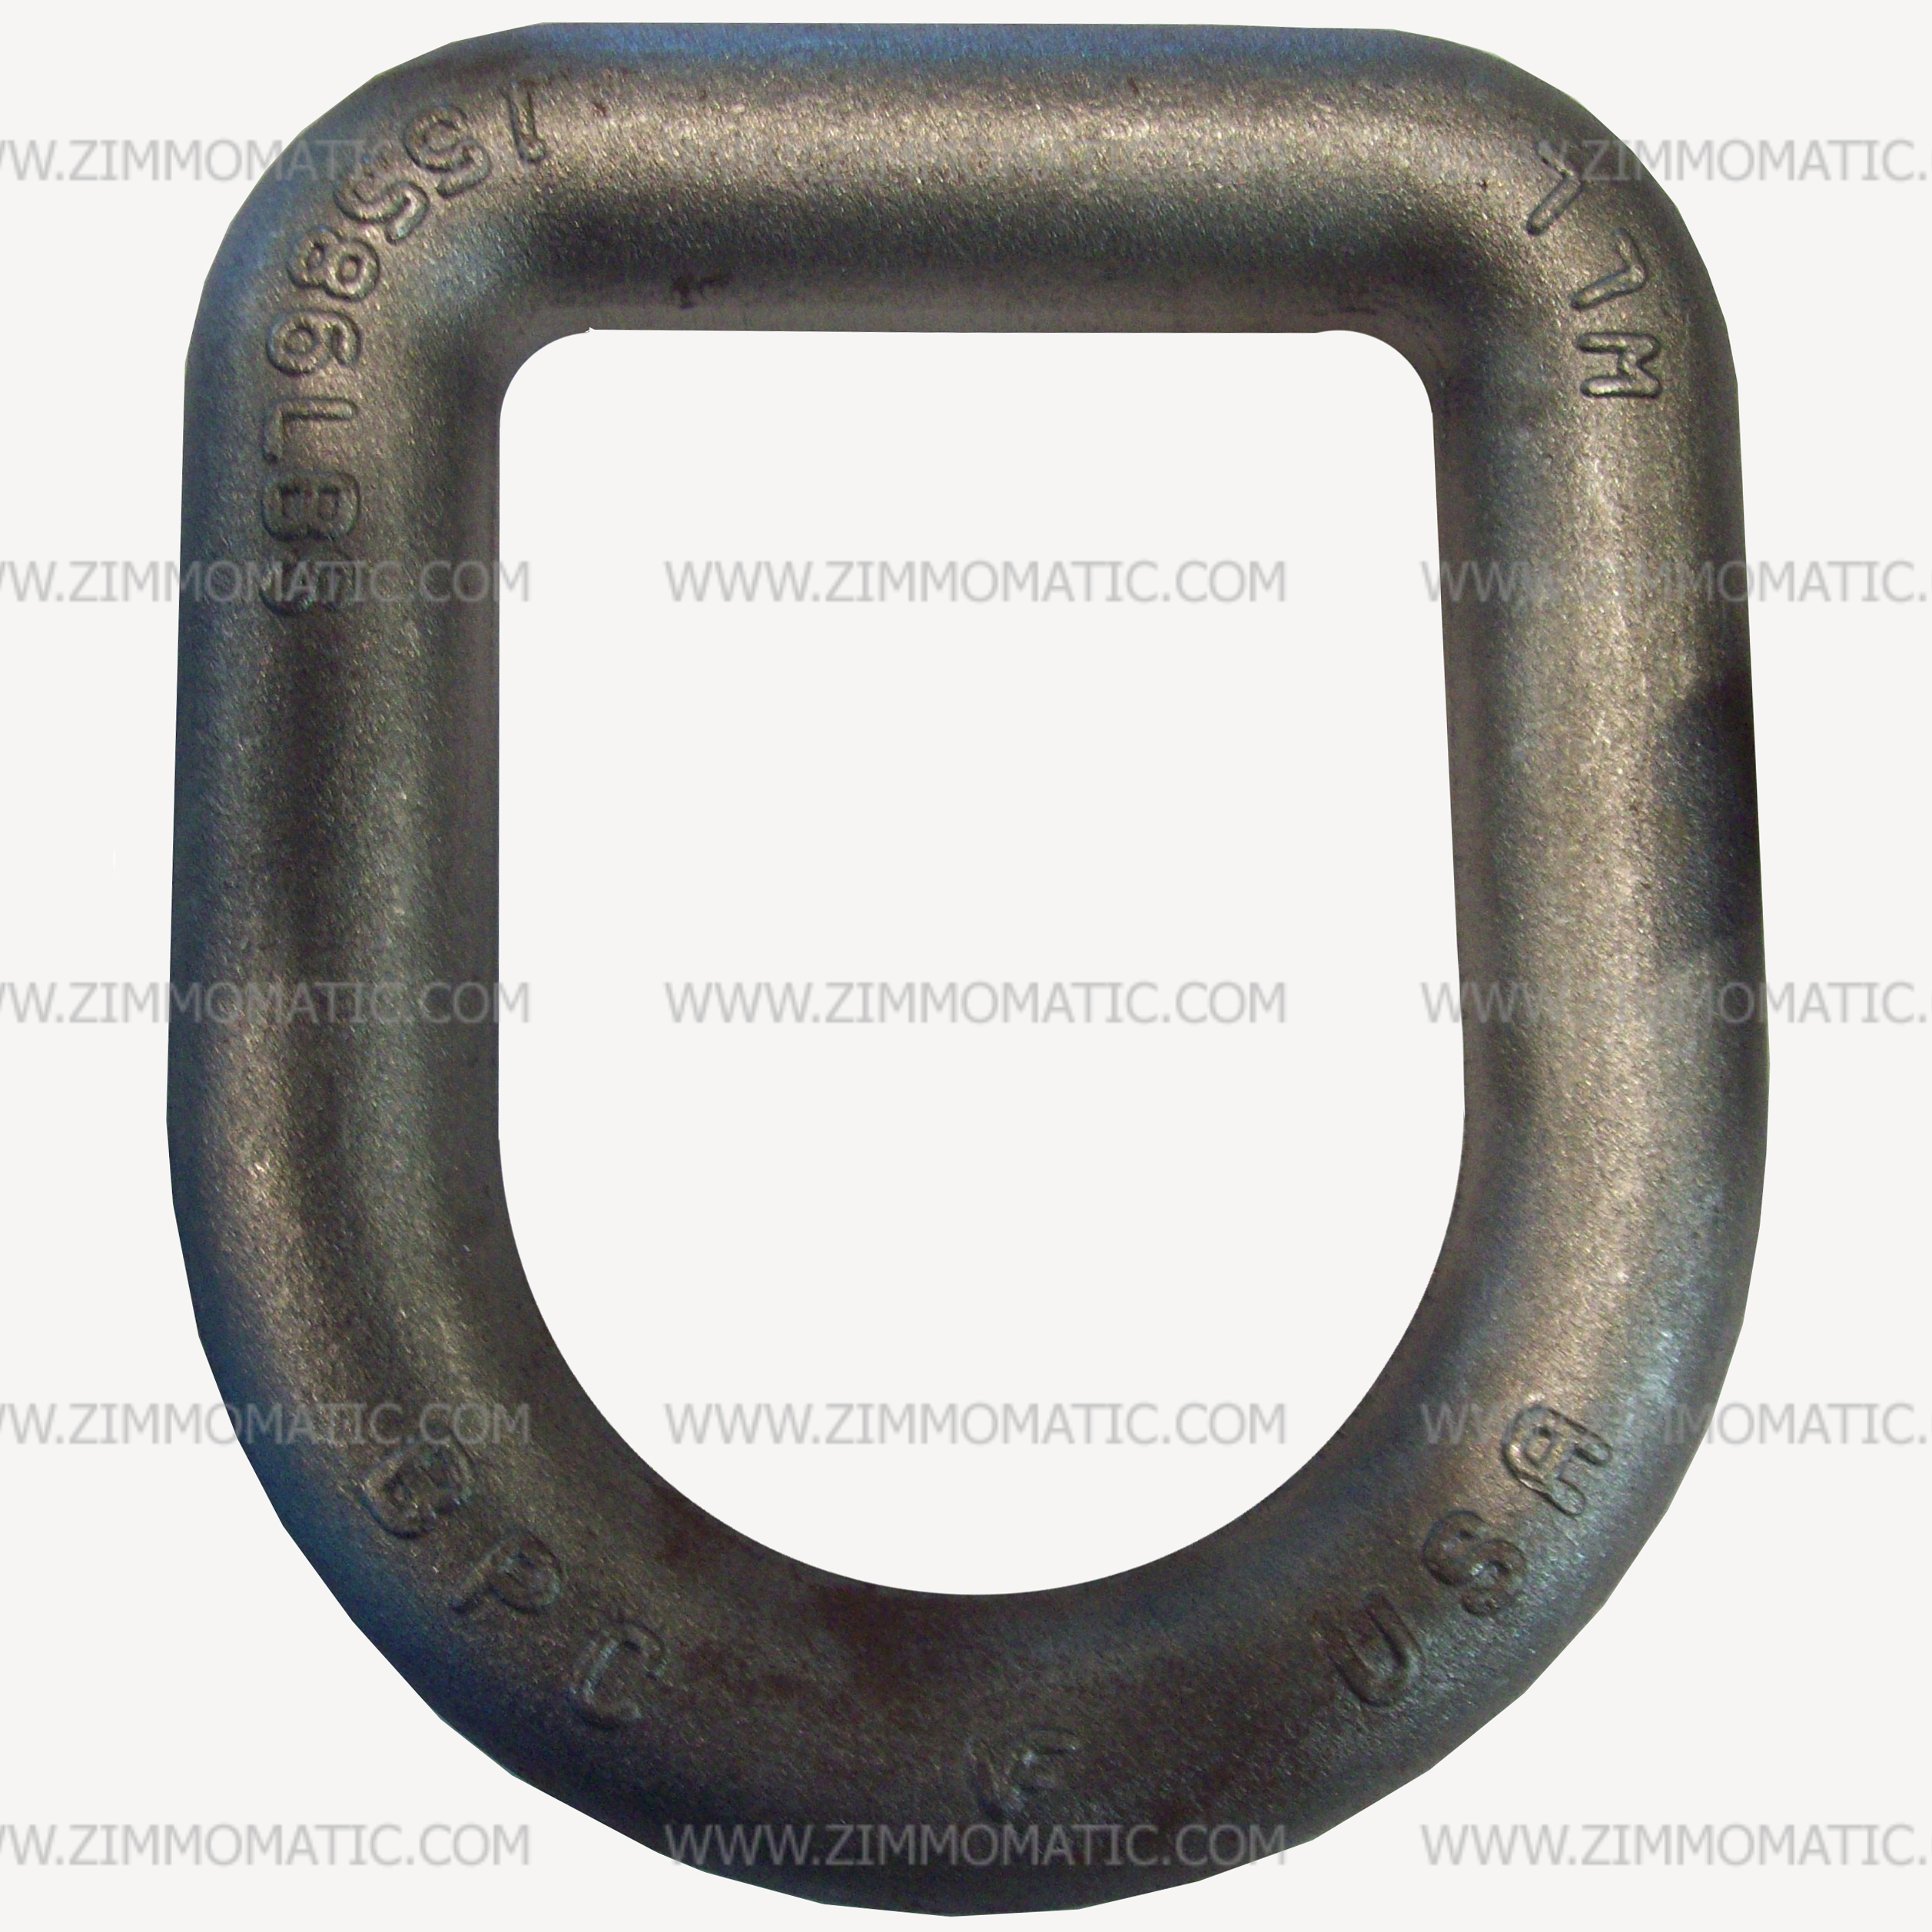 Metal D ring 1 inch